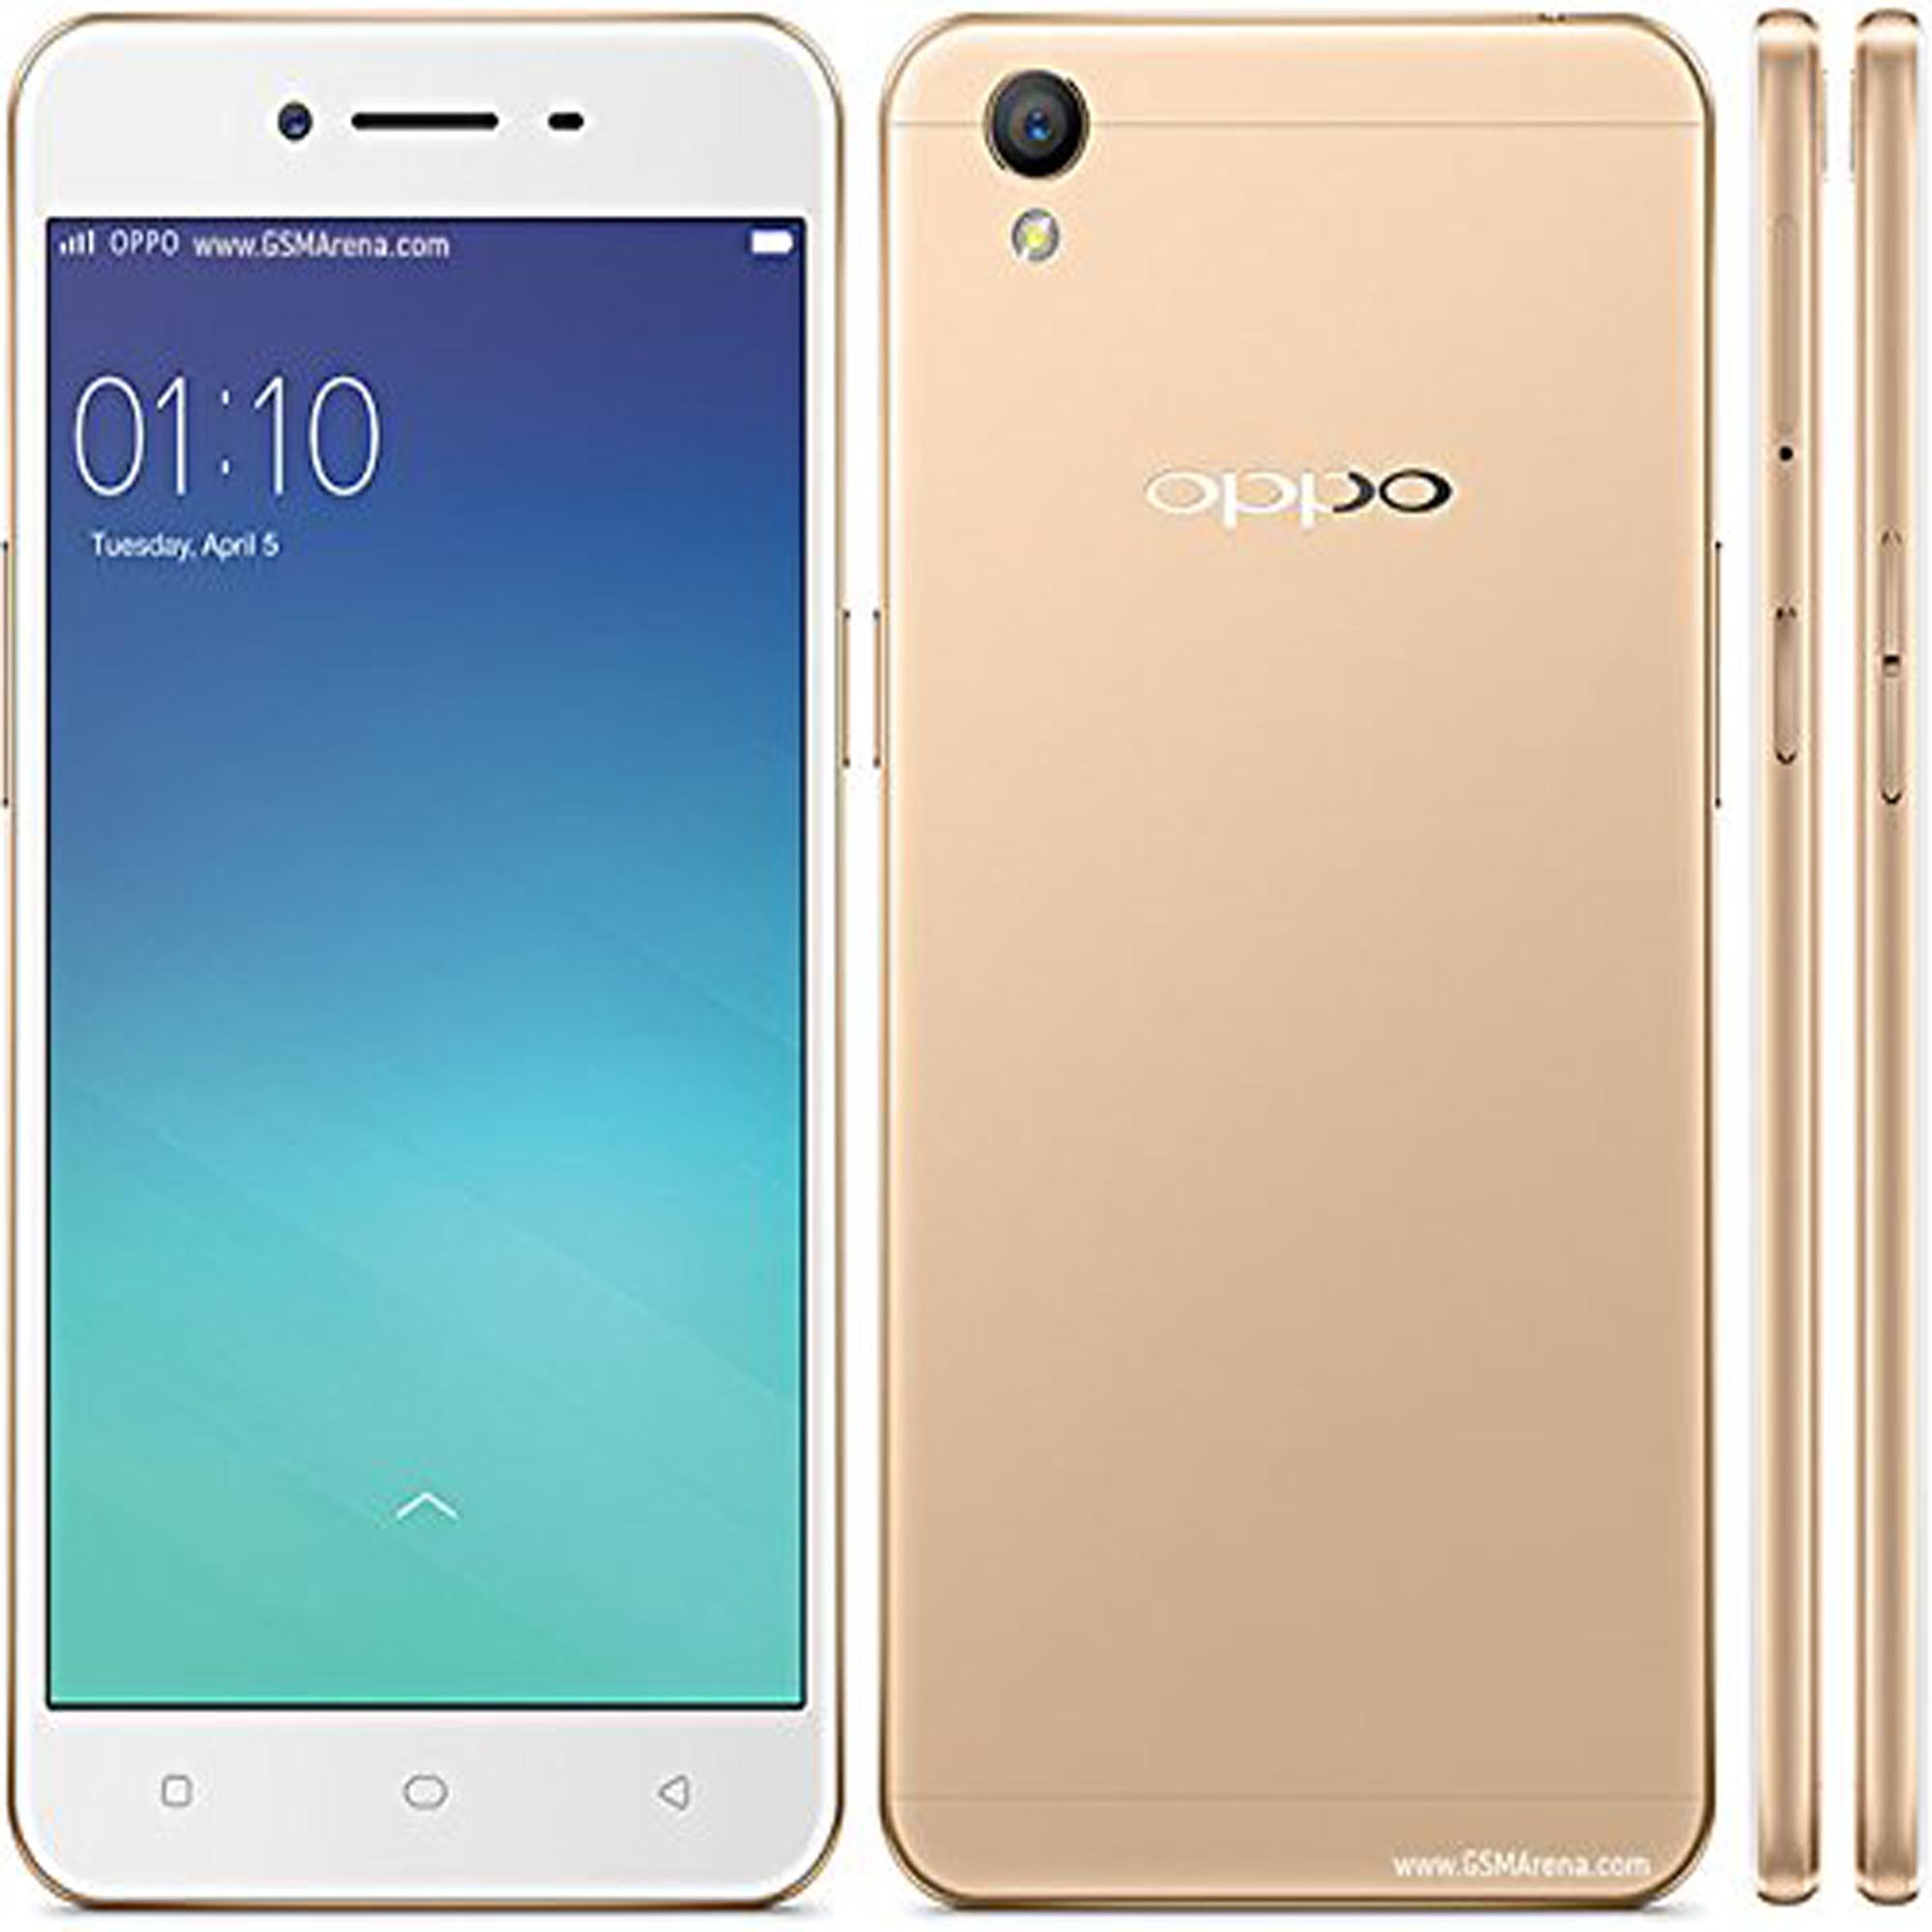 Oppo Neo 9/A37 Ram 2GB/16GB - Gold Smartphone